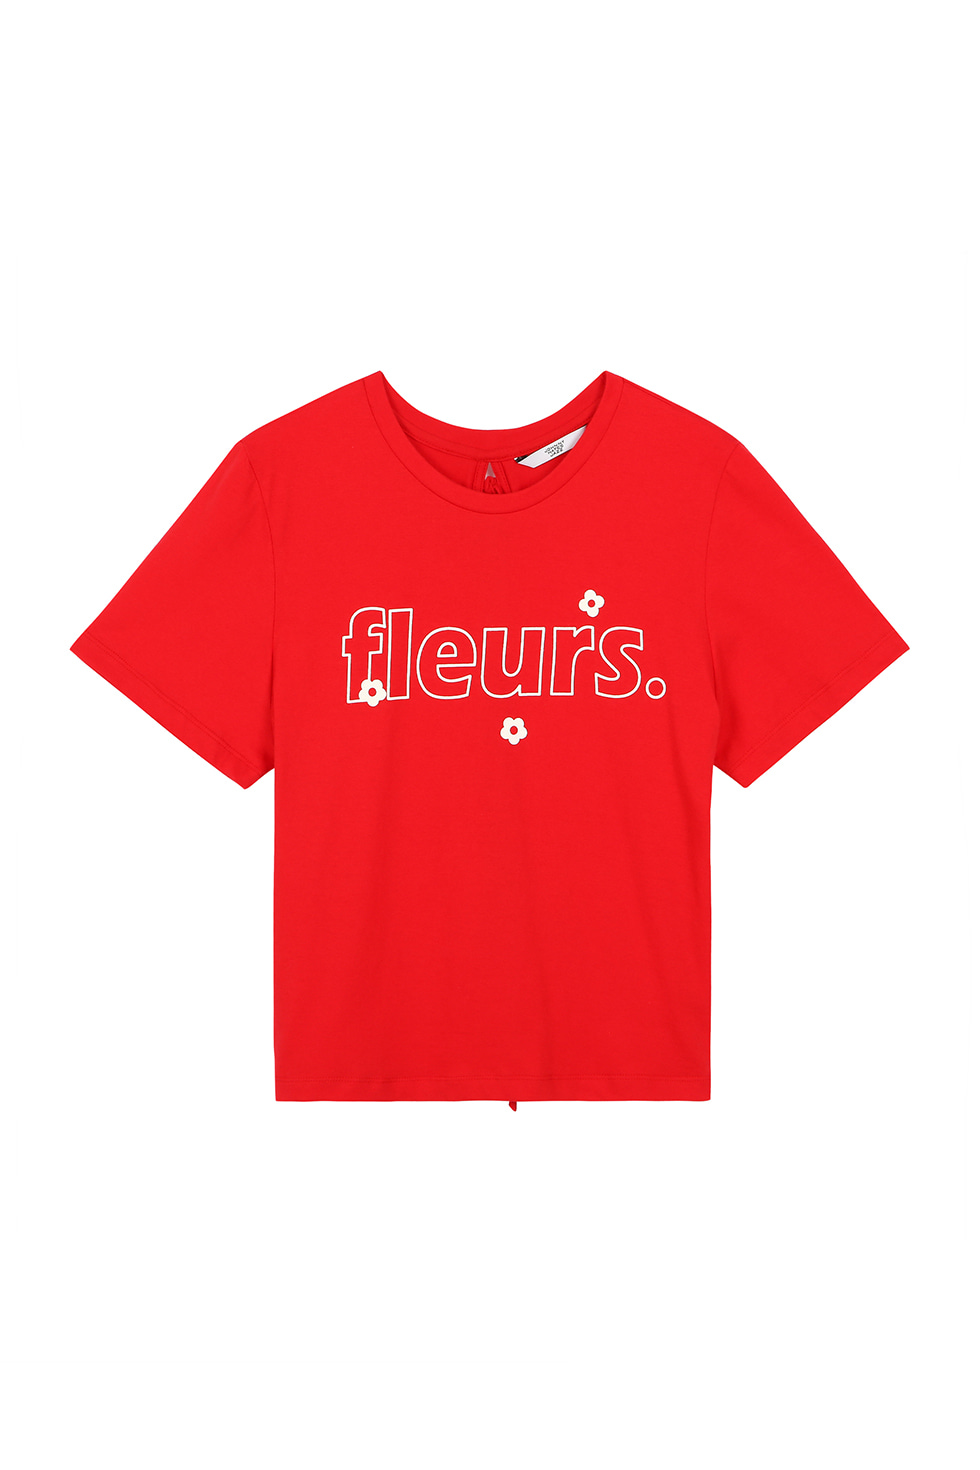 FLEURS T-SHIRTS - RED